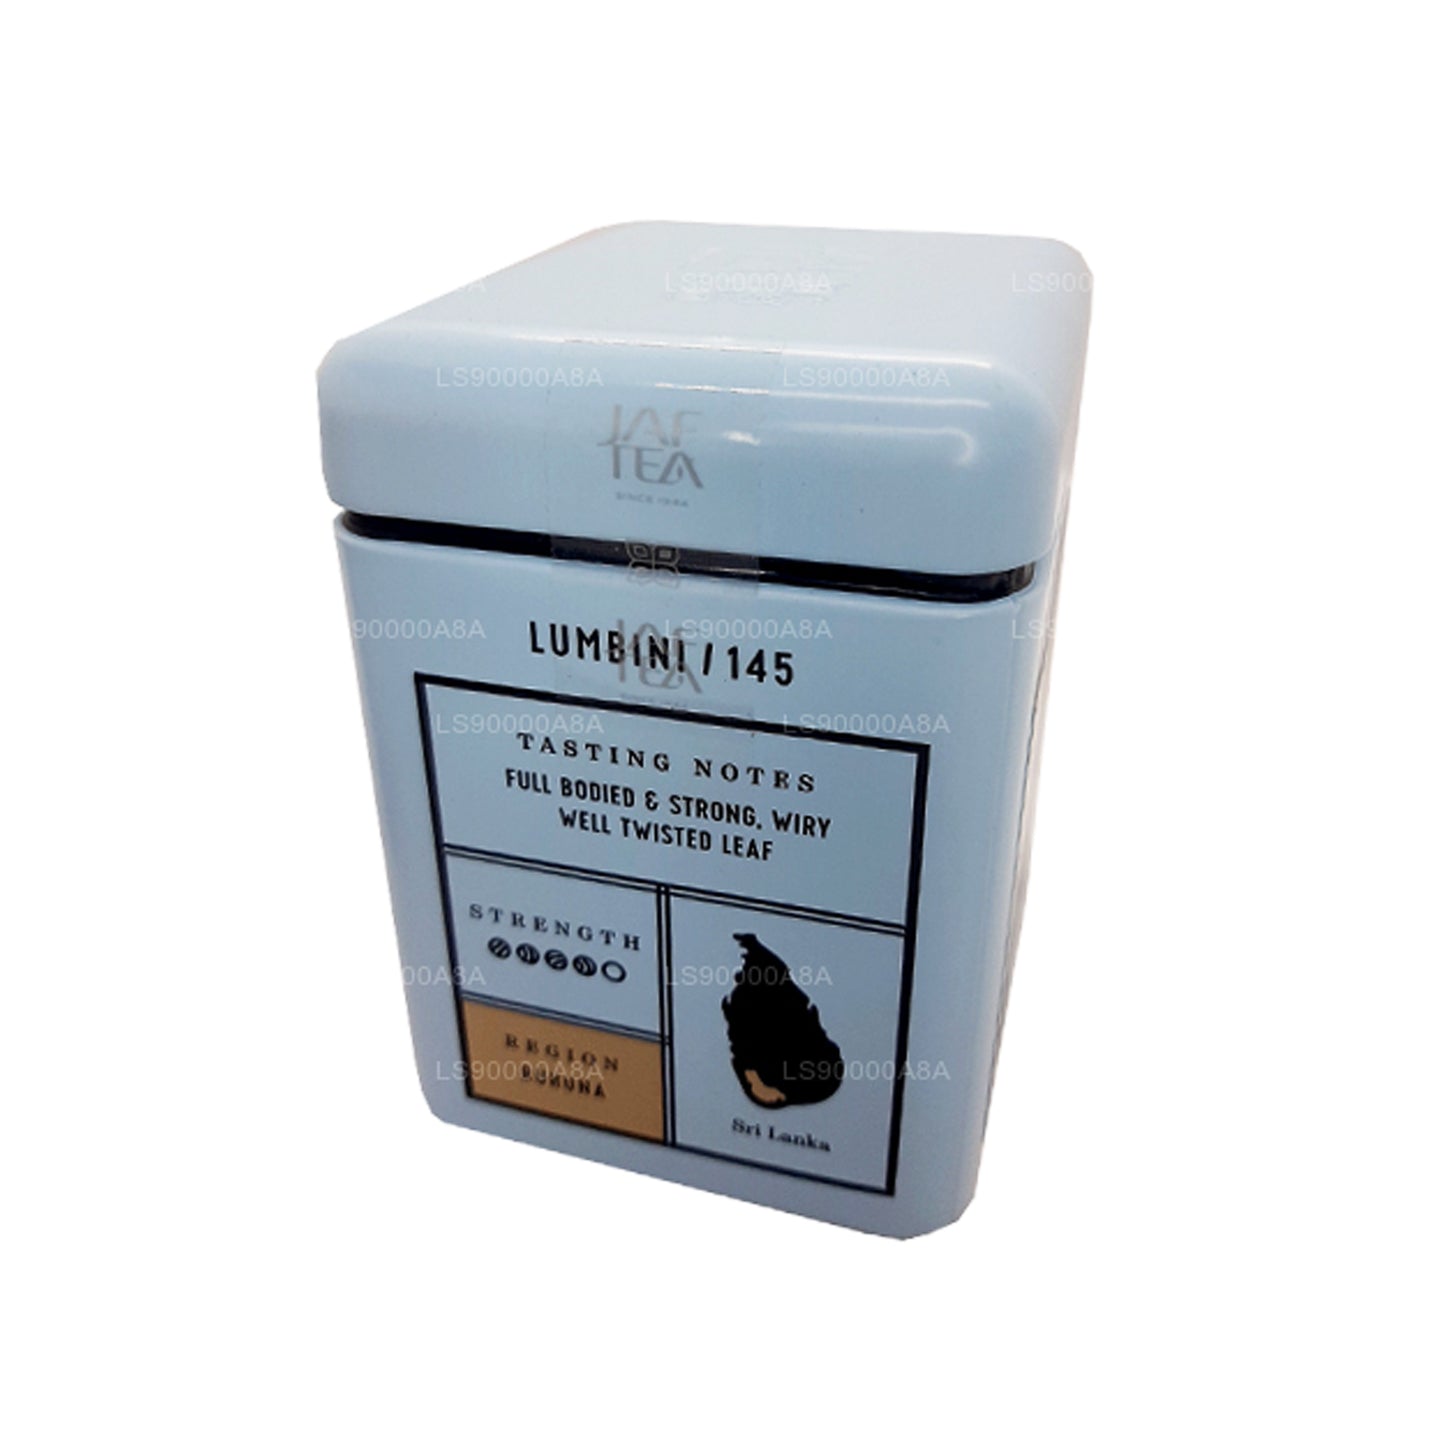 Jaf Tea シングルエステートコレクションルンビニ (100g) 缶